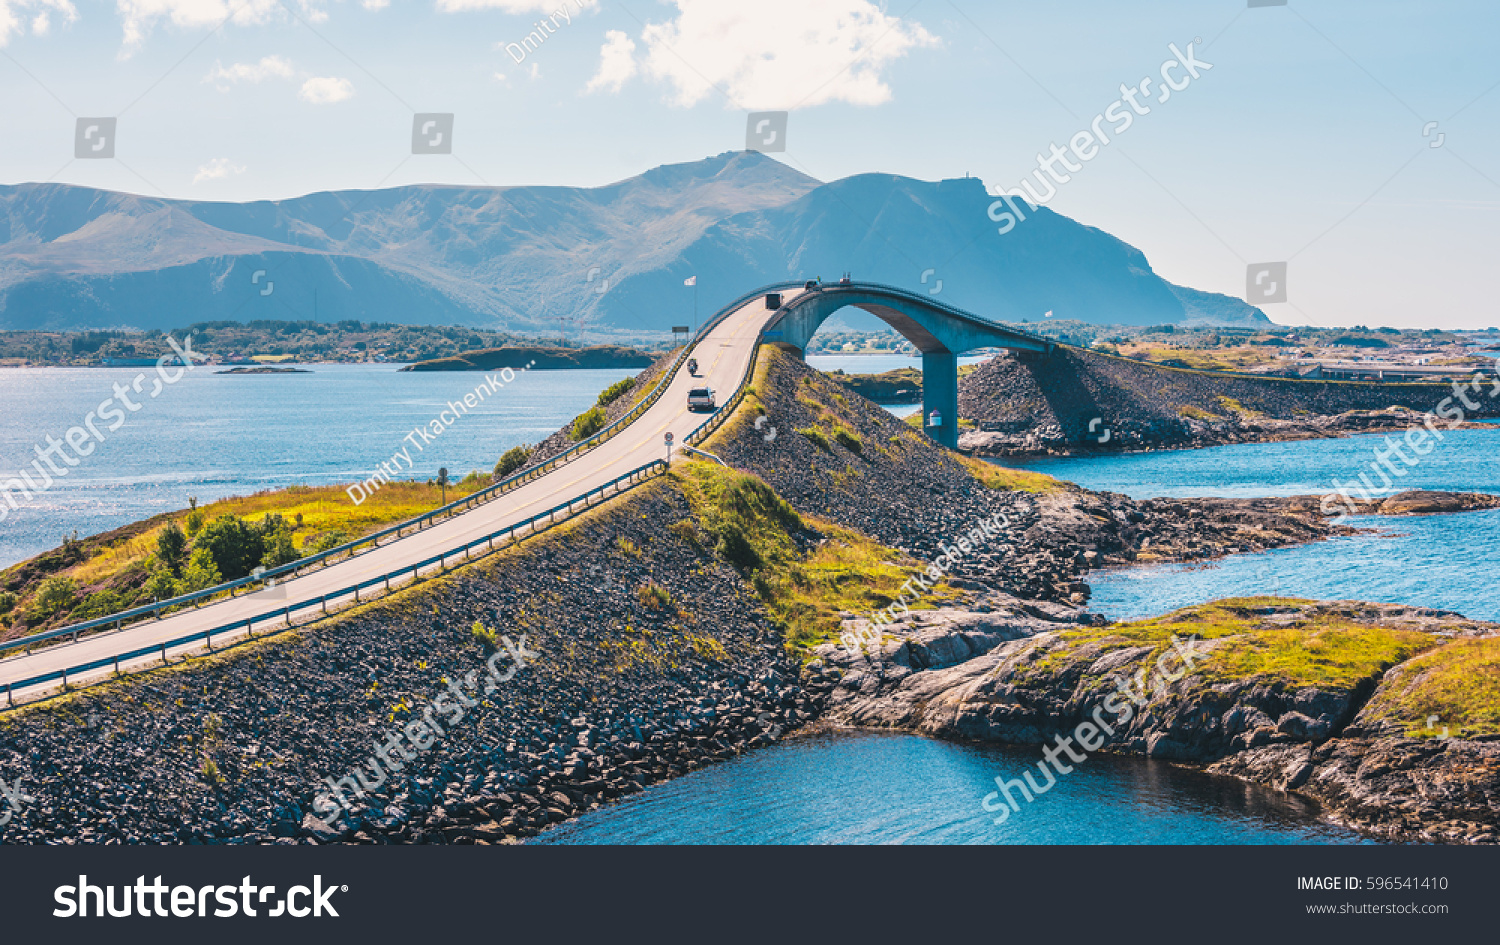 World famous Atlantic road bridge (Atlanterhavsvegen) with an amazing view over the norwegian mountains. Atlantic road runs through an archipelago in Eide and Averøy in Møre og Romsdal, Norway. #596541410